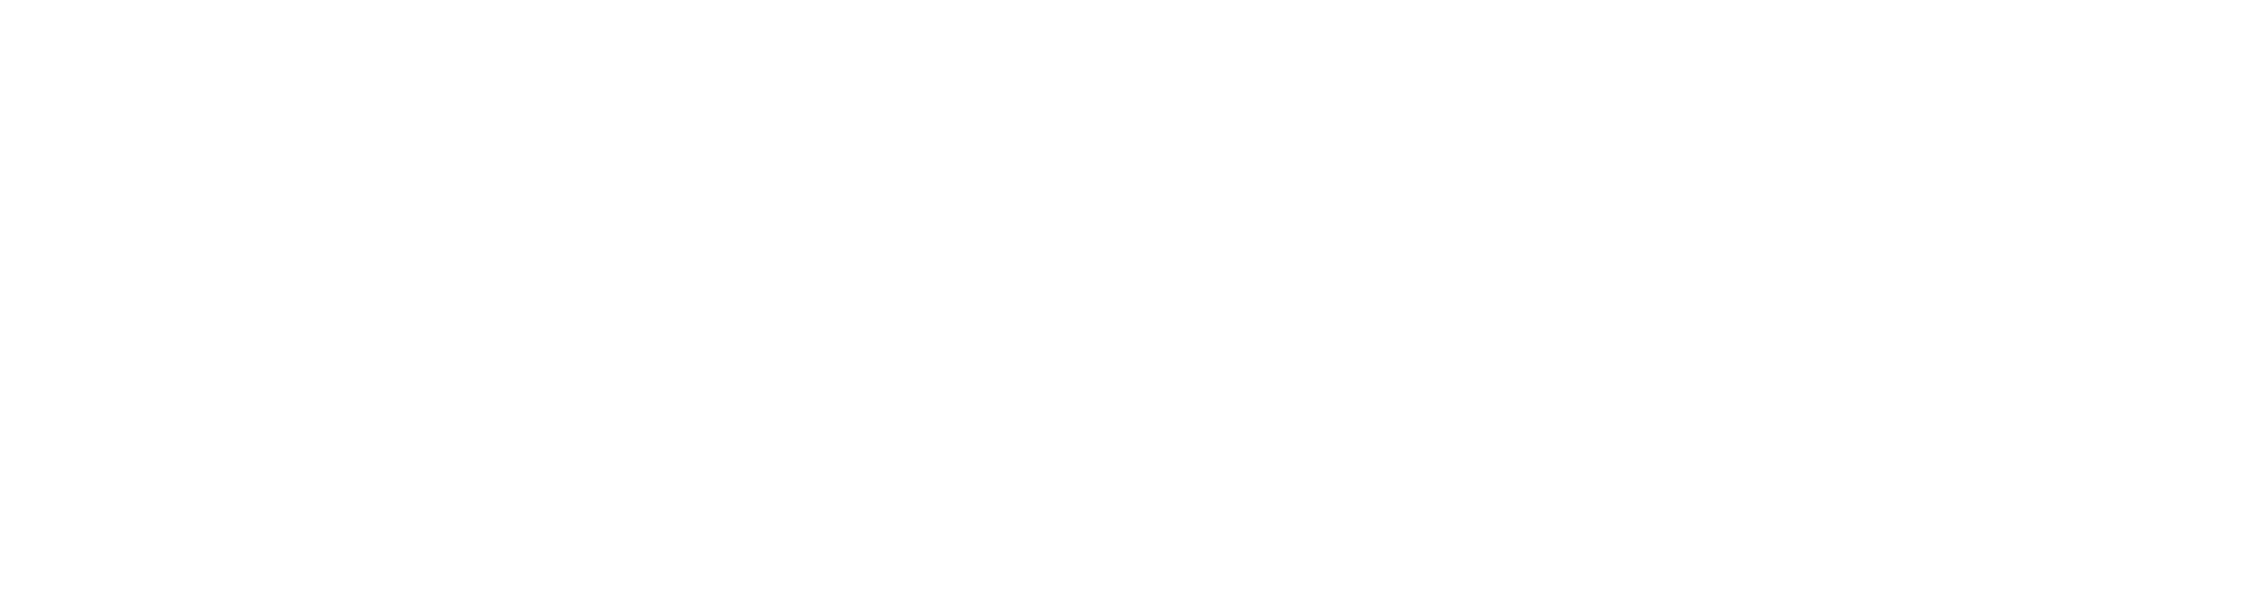 Image of acer logo brand for rentals